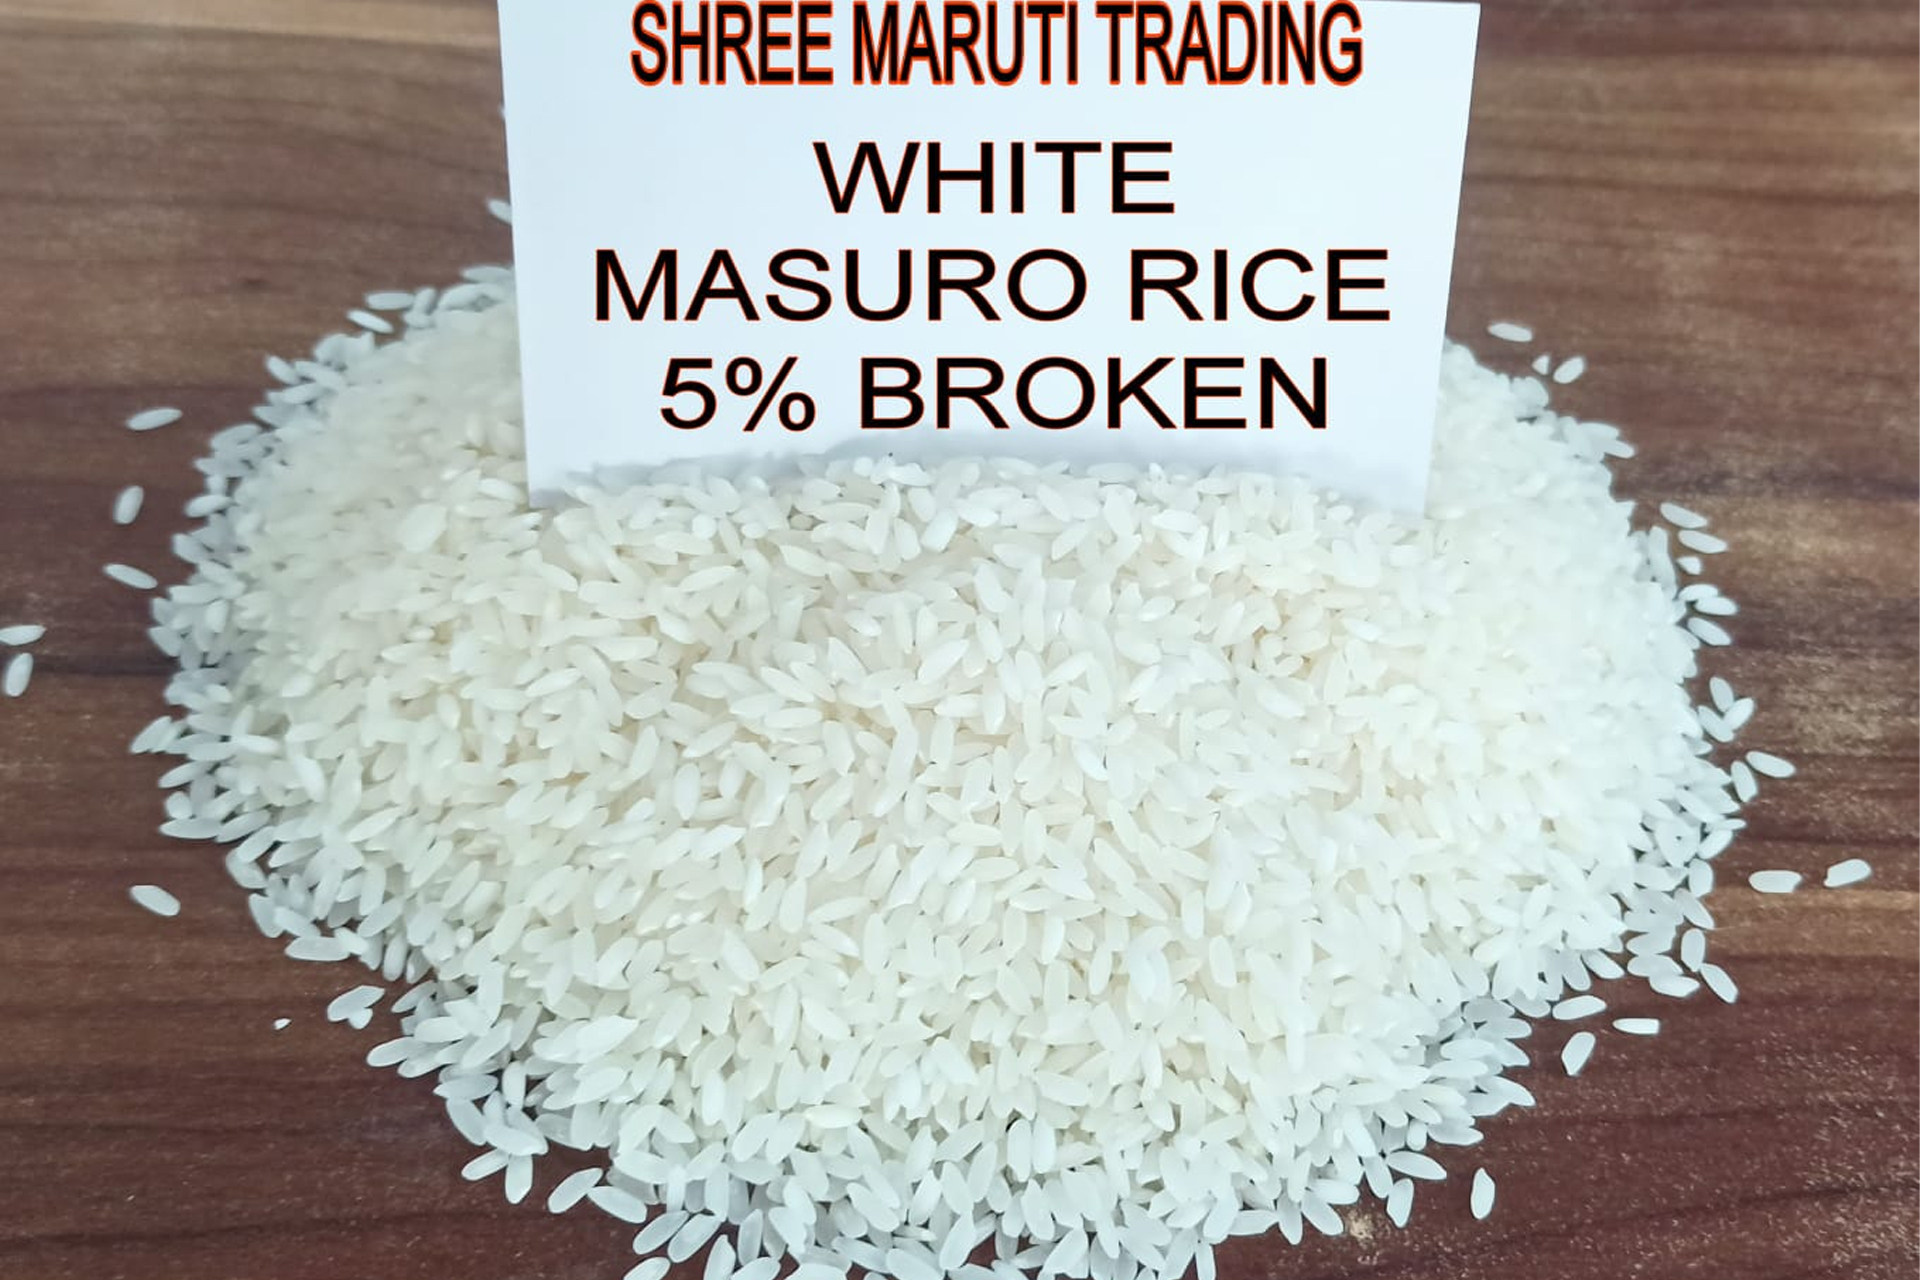 White Masuro Rice 5% Broken